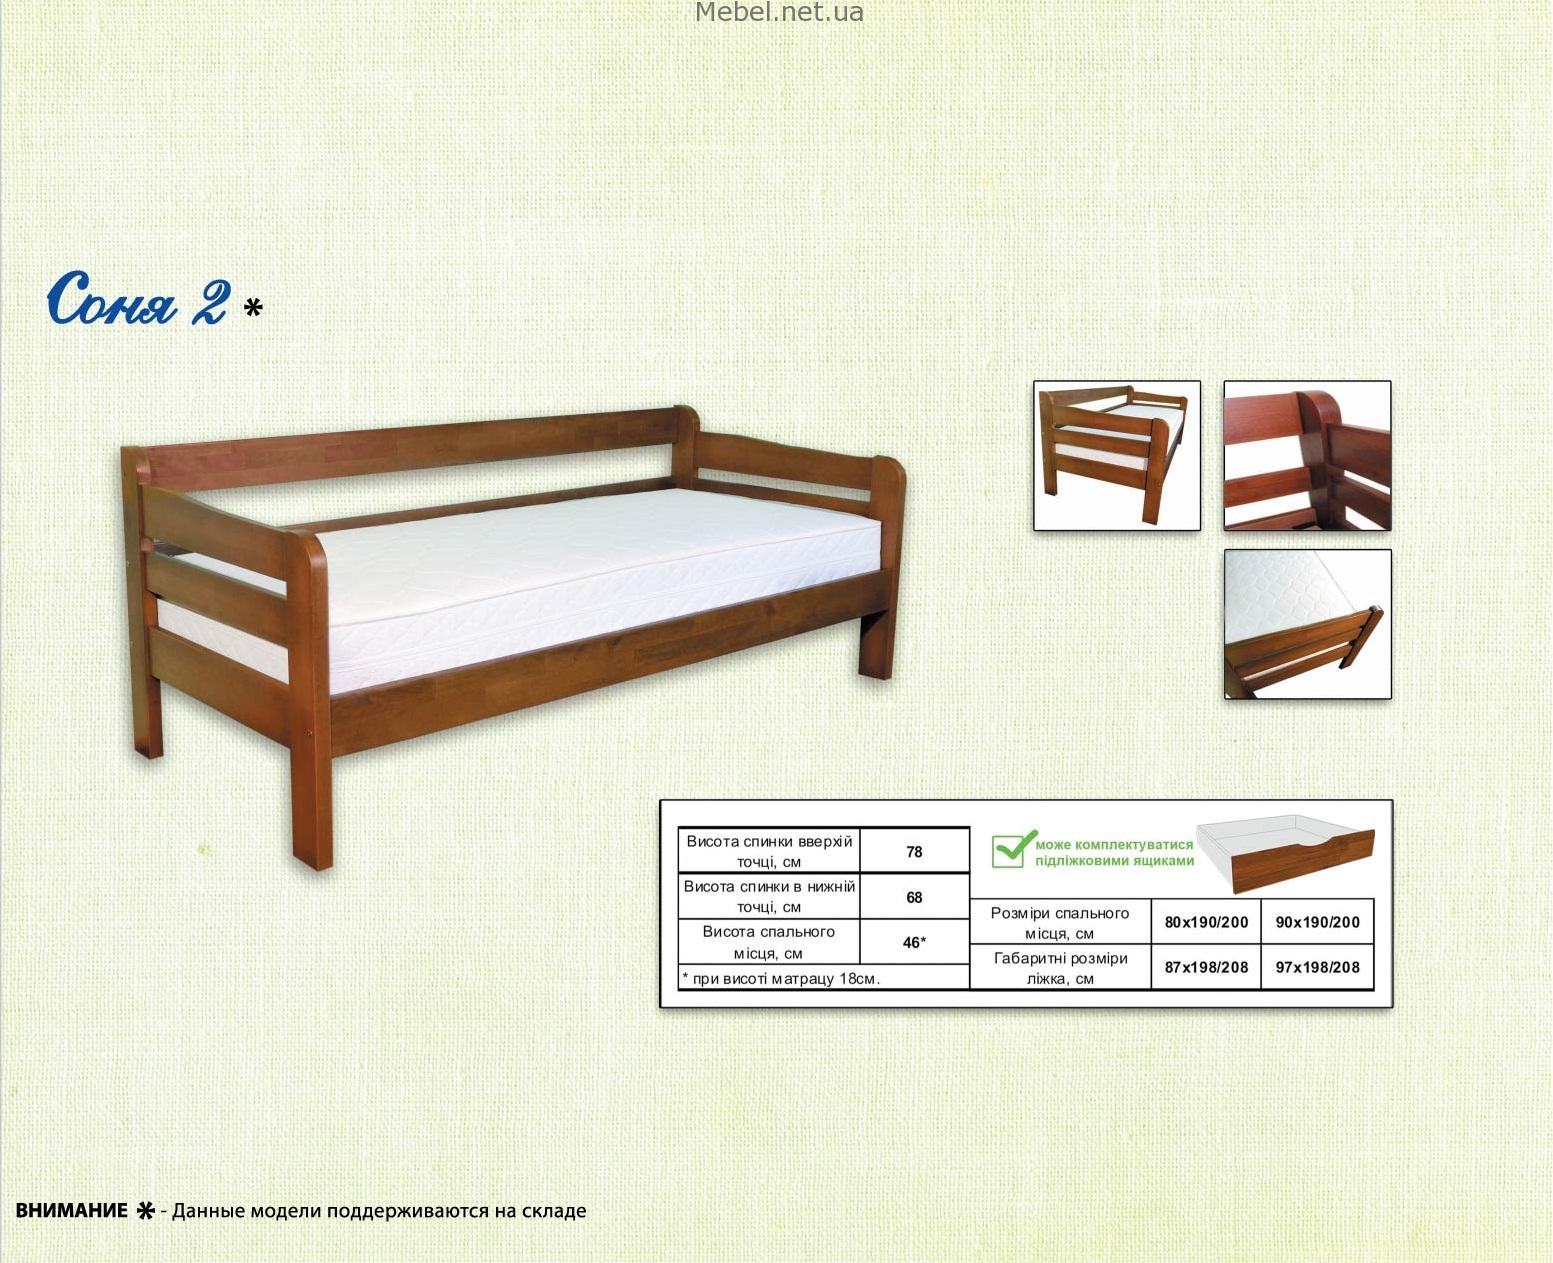 Кровать Соня размер 190 на 80 размер ламелей